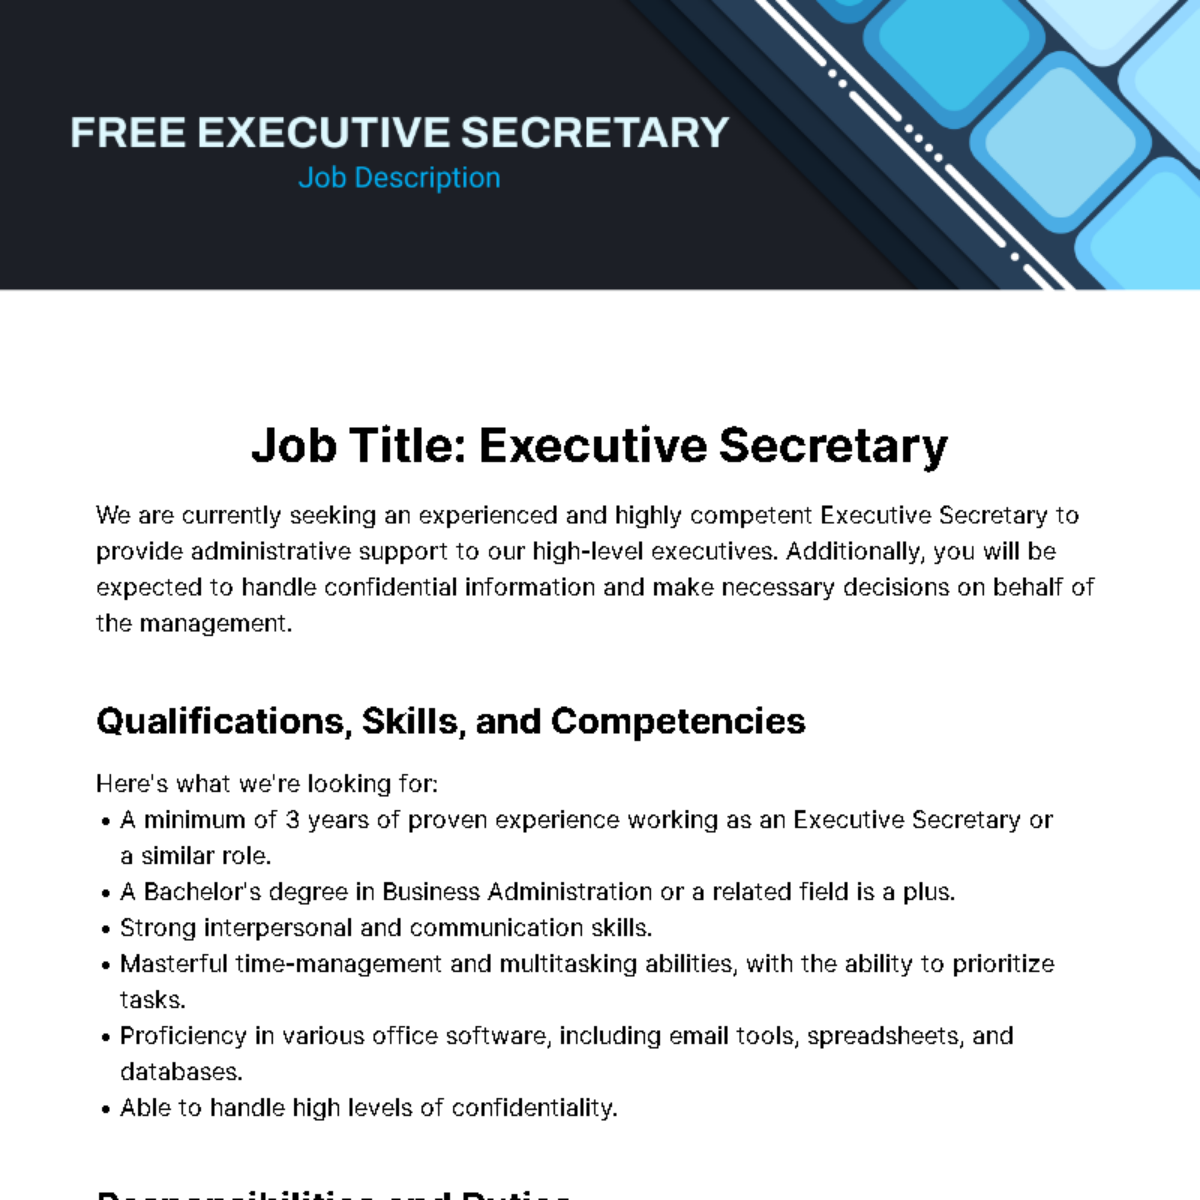 Free Executive Secretary Job Description Template